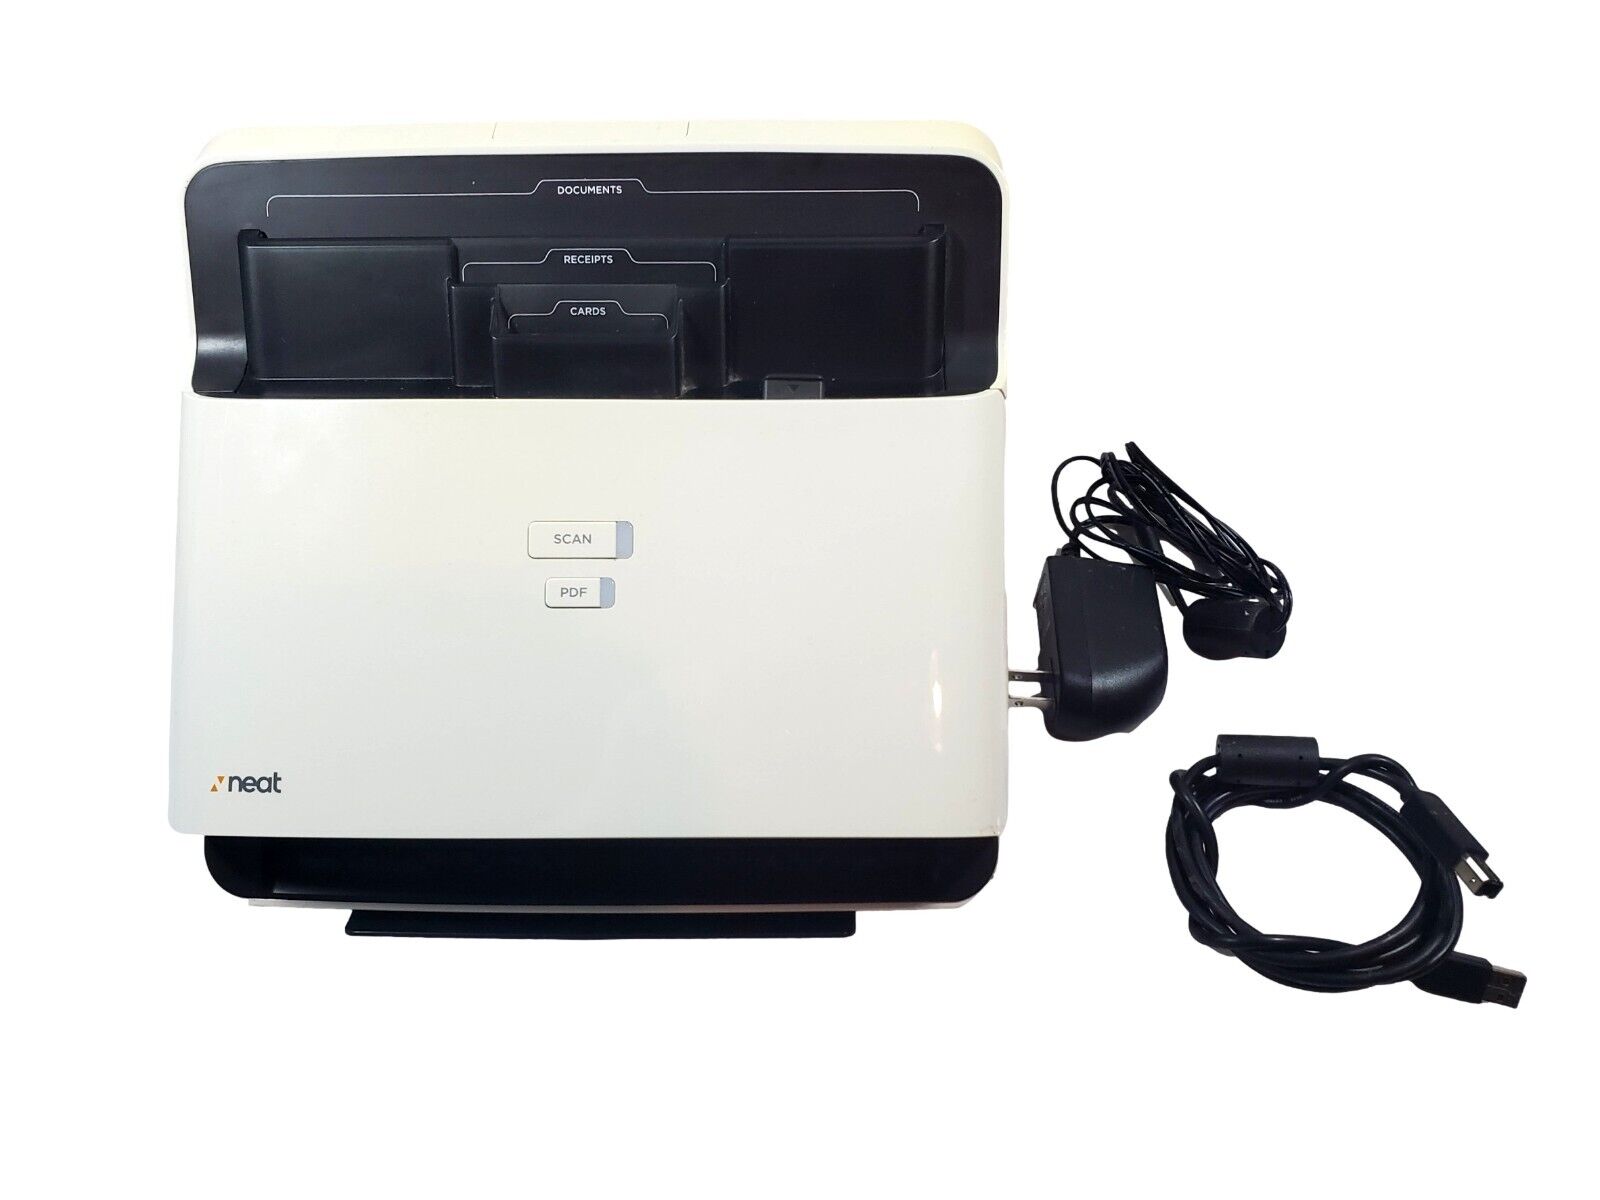 Neat Desk ND-1000 Desktop Receipt Document Scanner with AC adapter & USB cord 